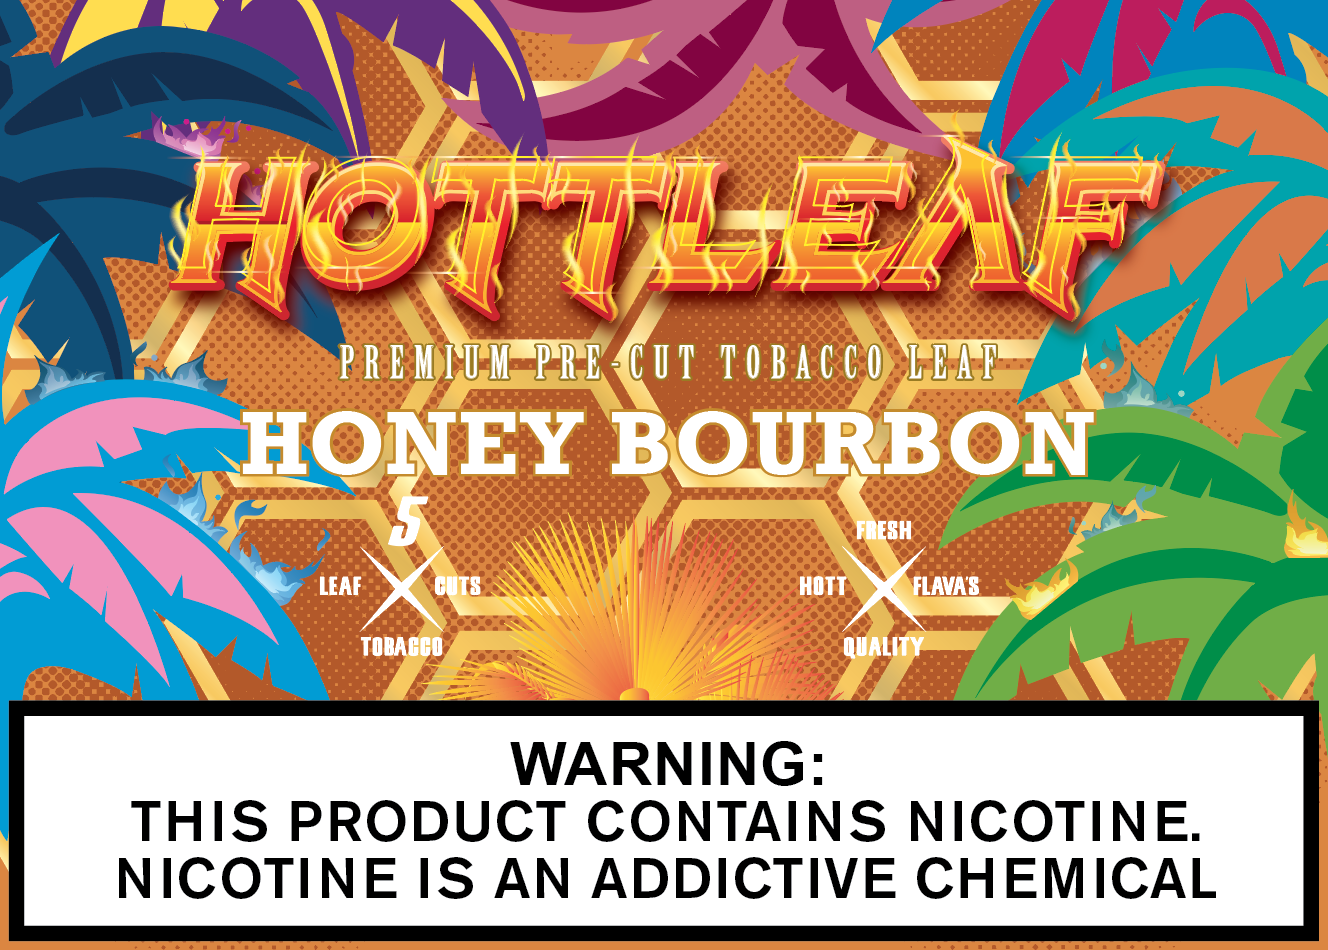 Hottleaf premium cut hny bourbon tobacco leaf 8/5p